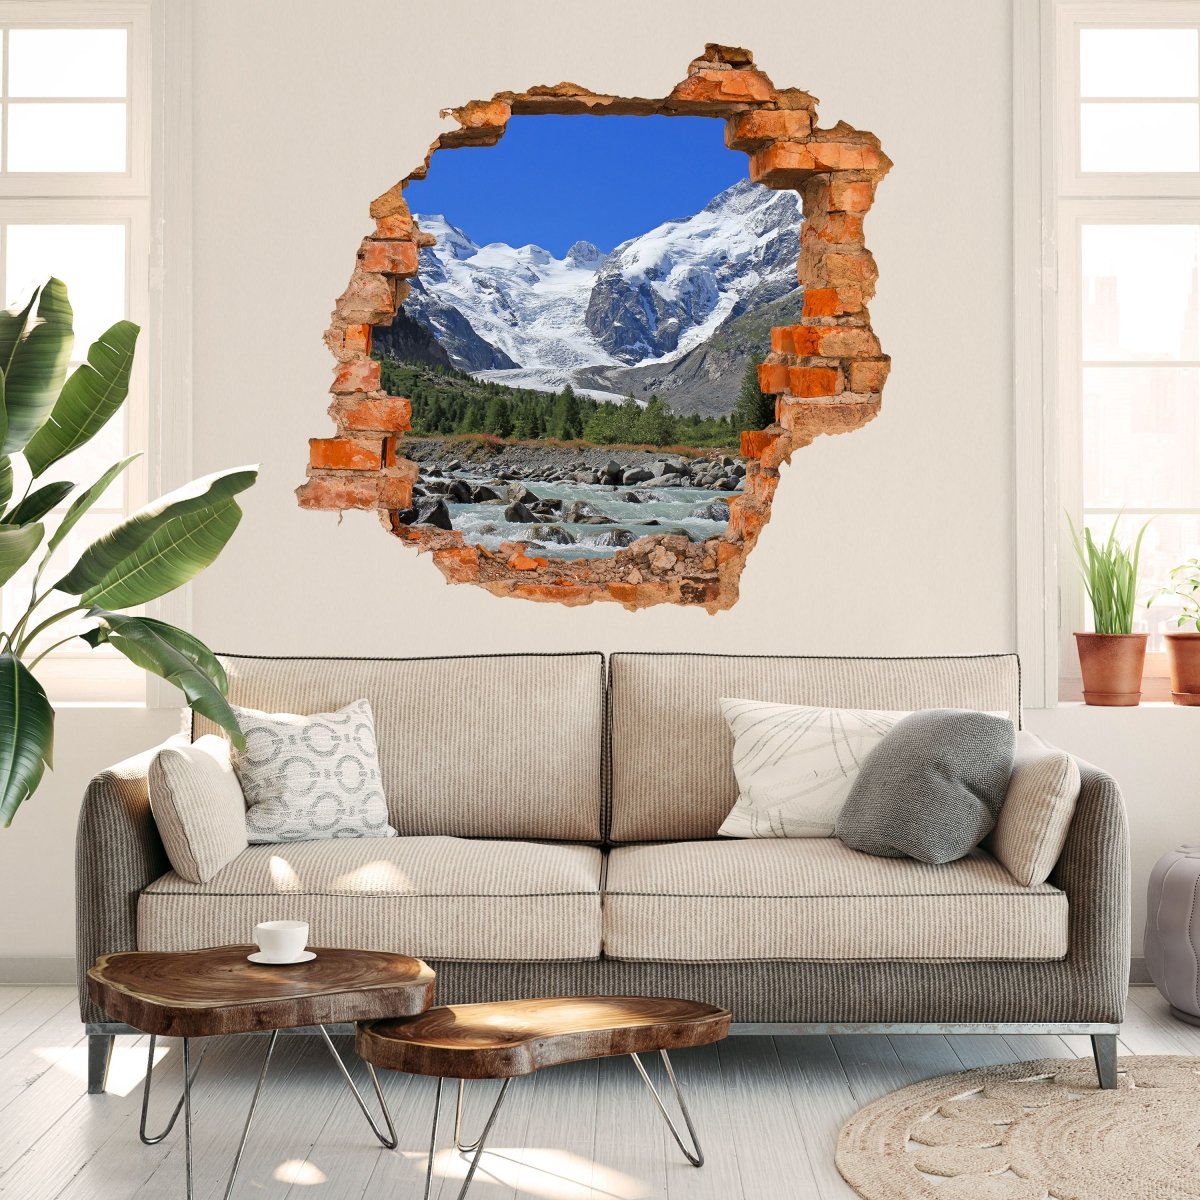 Sticker mural 3D Alpes glaciaires de Morteratsch - Tatouage mural M0236